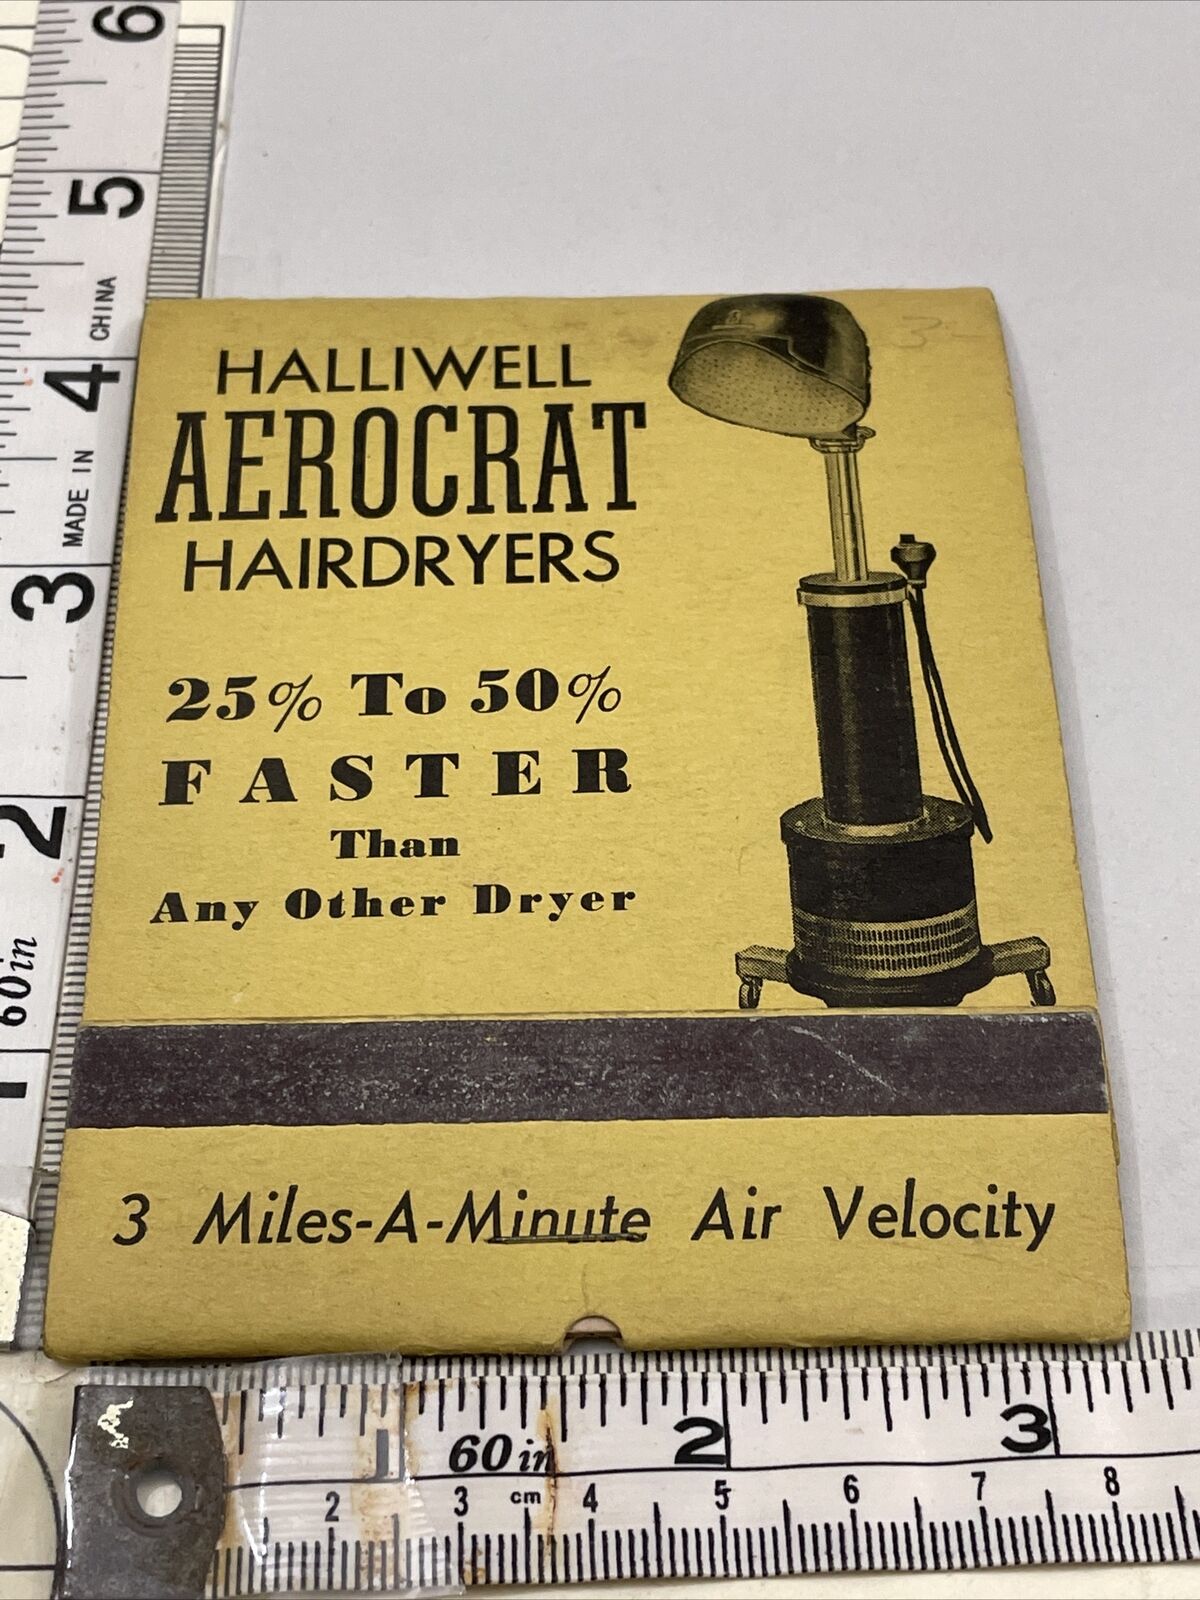 Giant Feature Matchbook Halliwell Aerocrat Hairdryers gmg Repaired